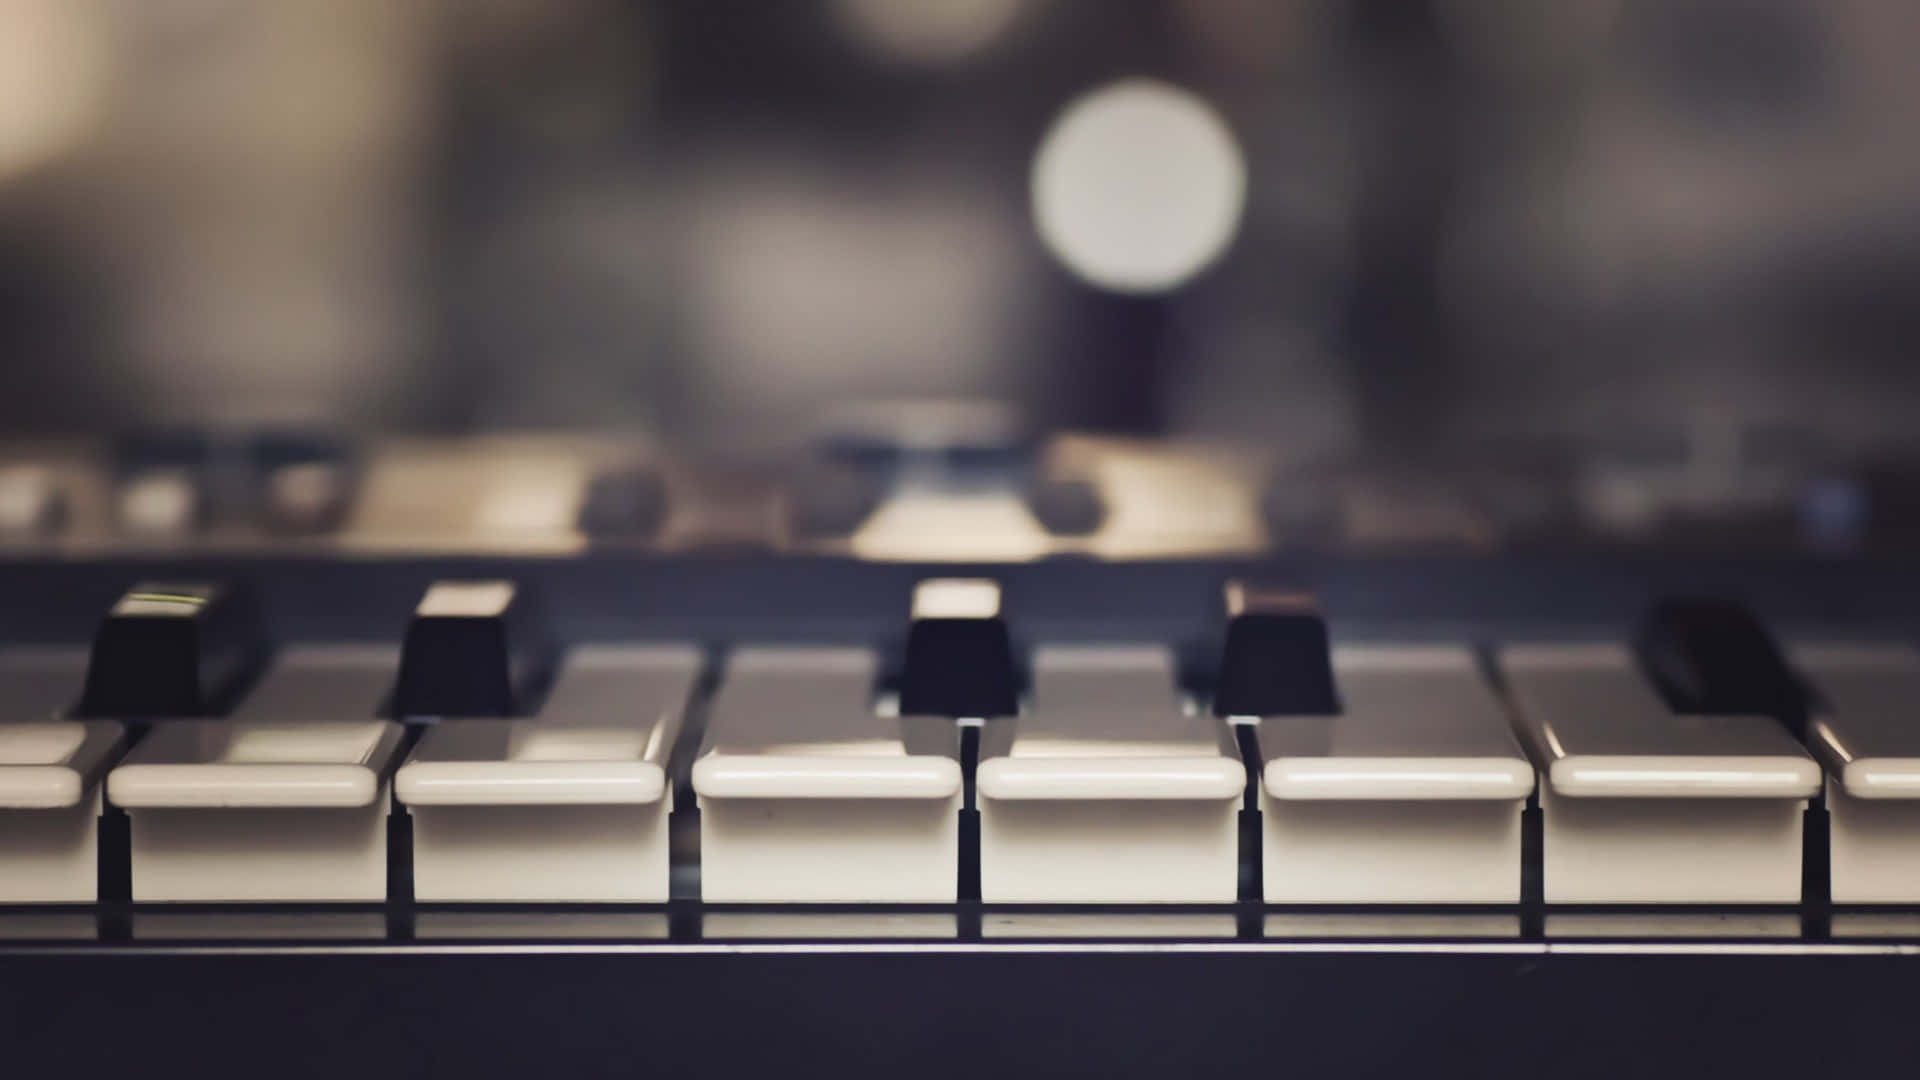 A Close Up Of A Piano Keyboard